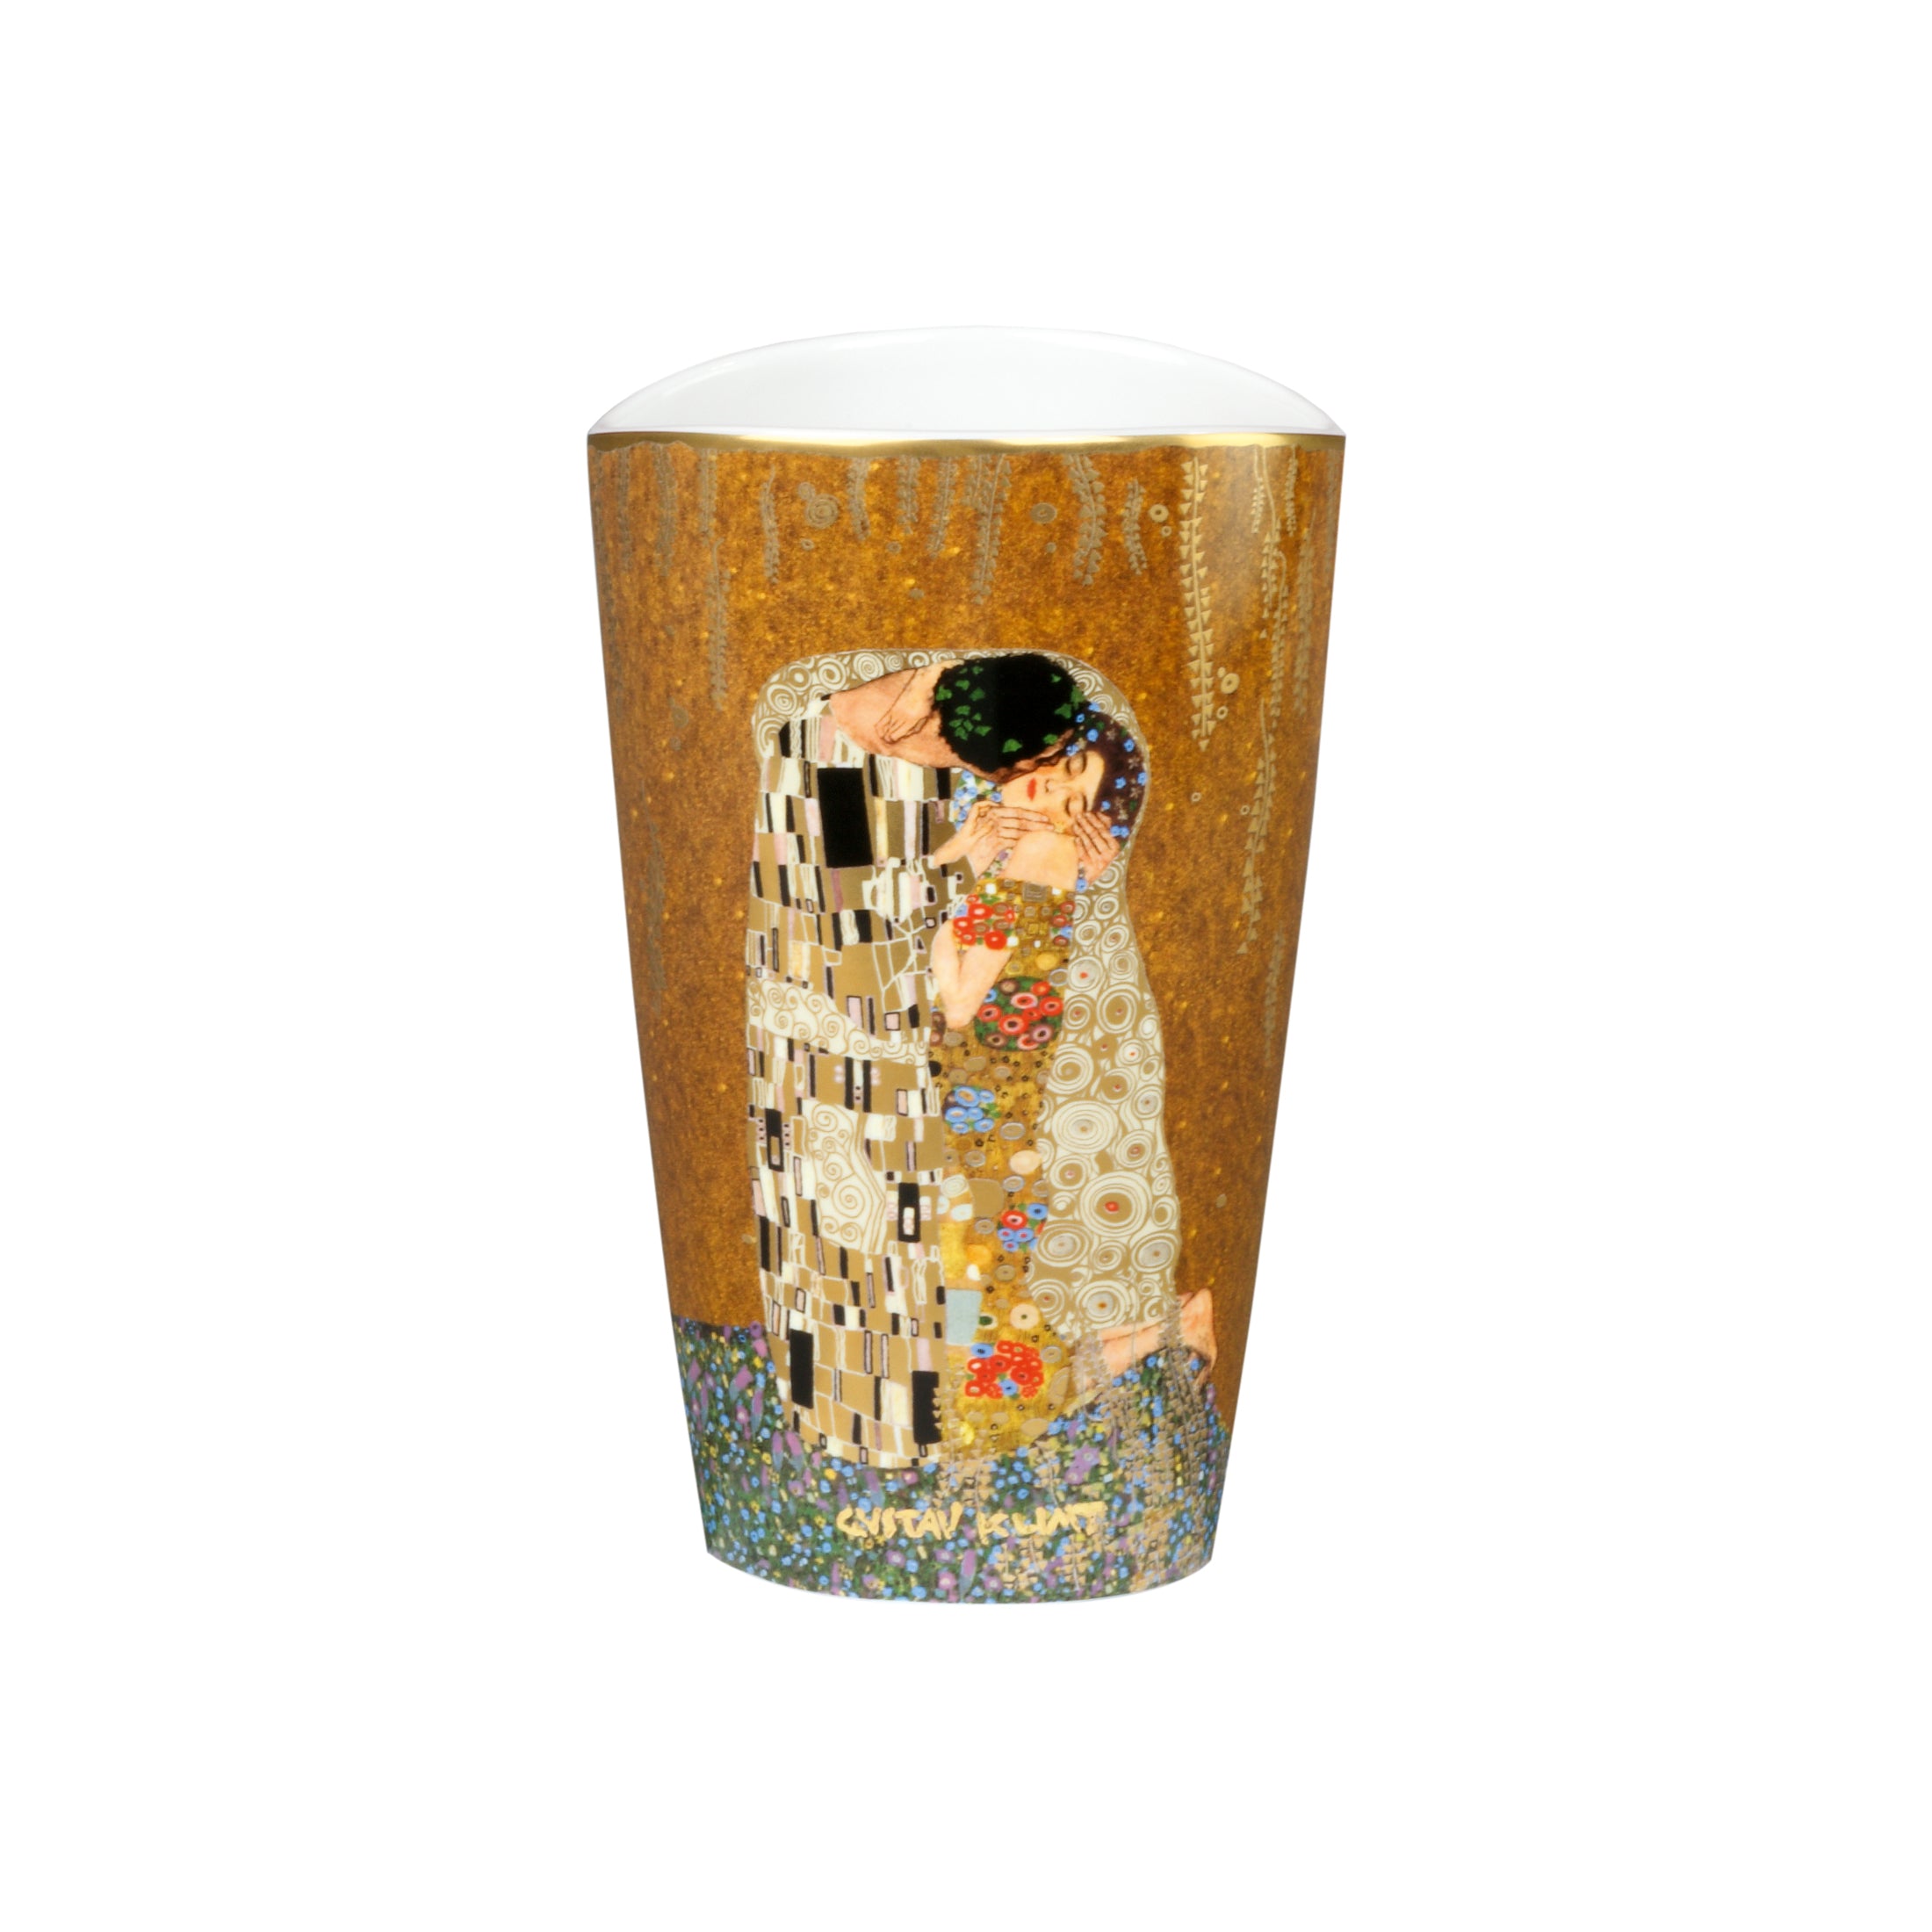 Goebel Artis Orbis Vase Der Kuss, Gustav Klimt - Porzellan